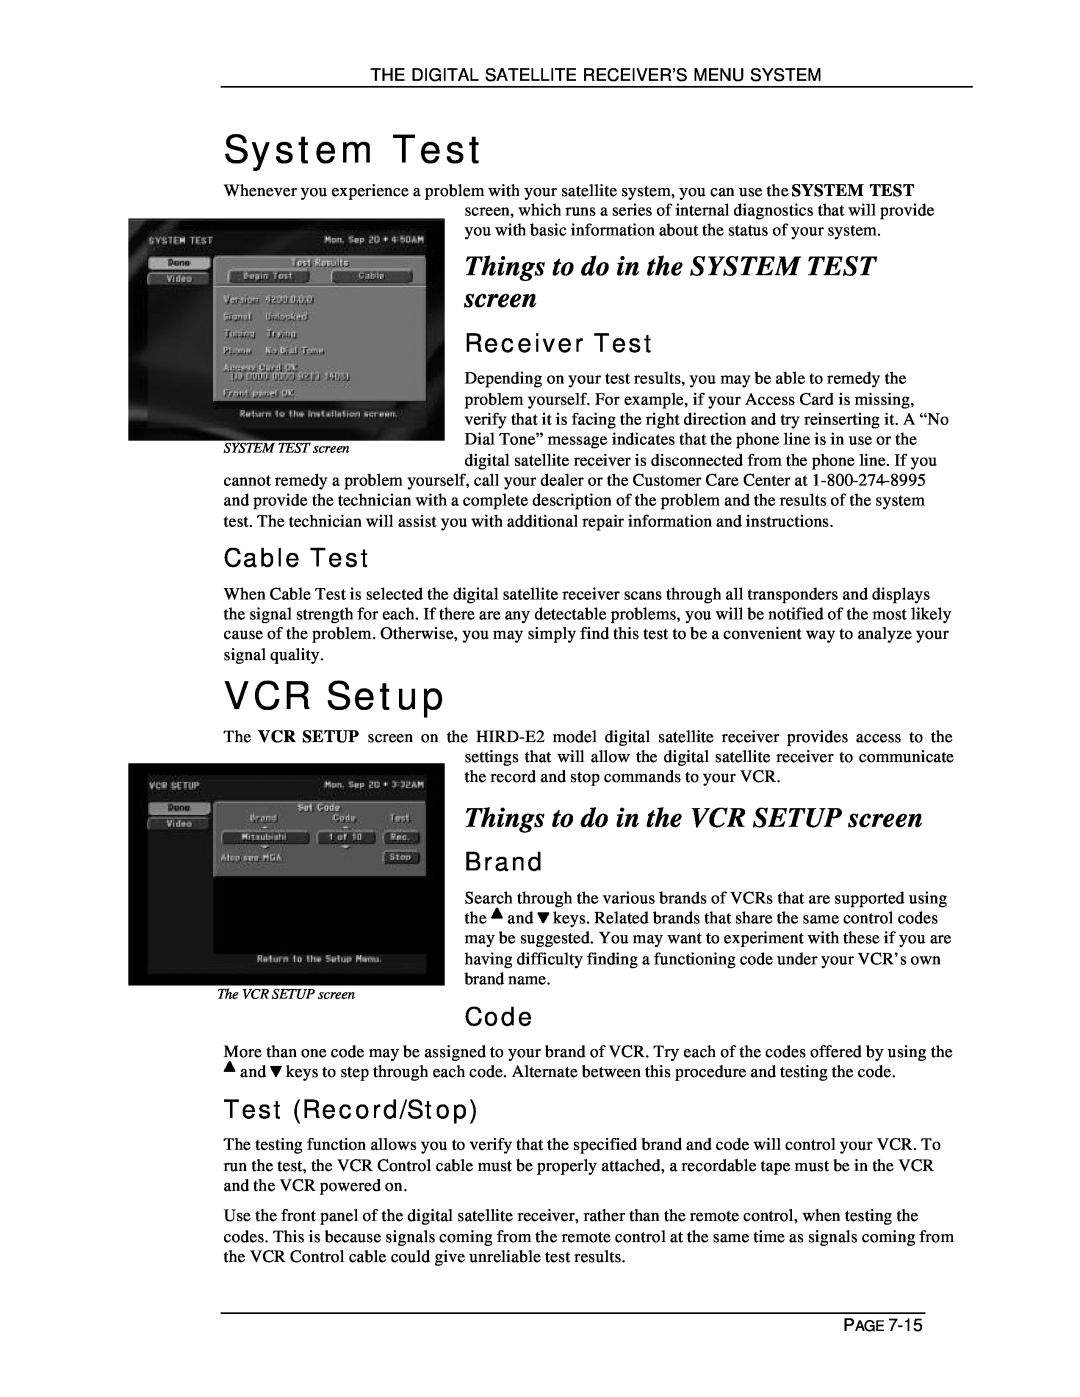 DirecTV HIRD-E11 System Test, VCR Setup, Things to do in the SYSTEM TEST screen, Things to do in the VCR SETUP screen 